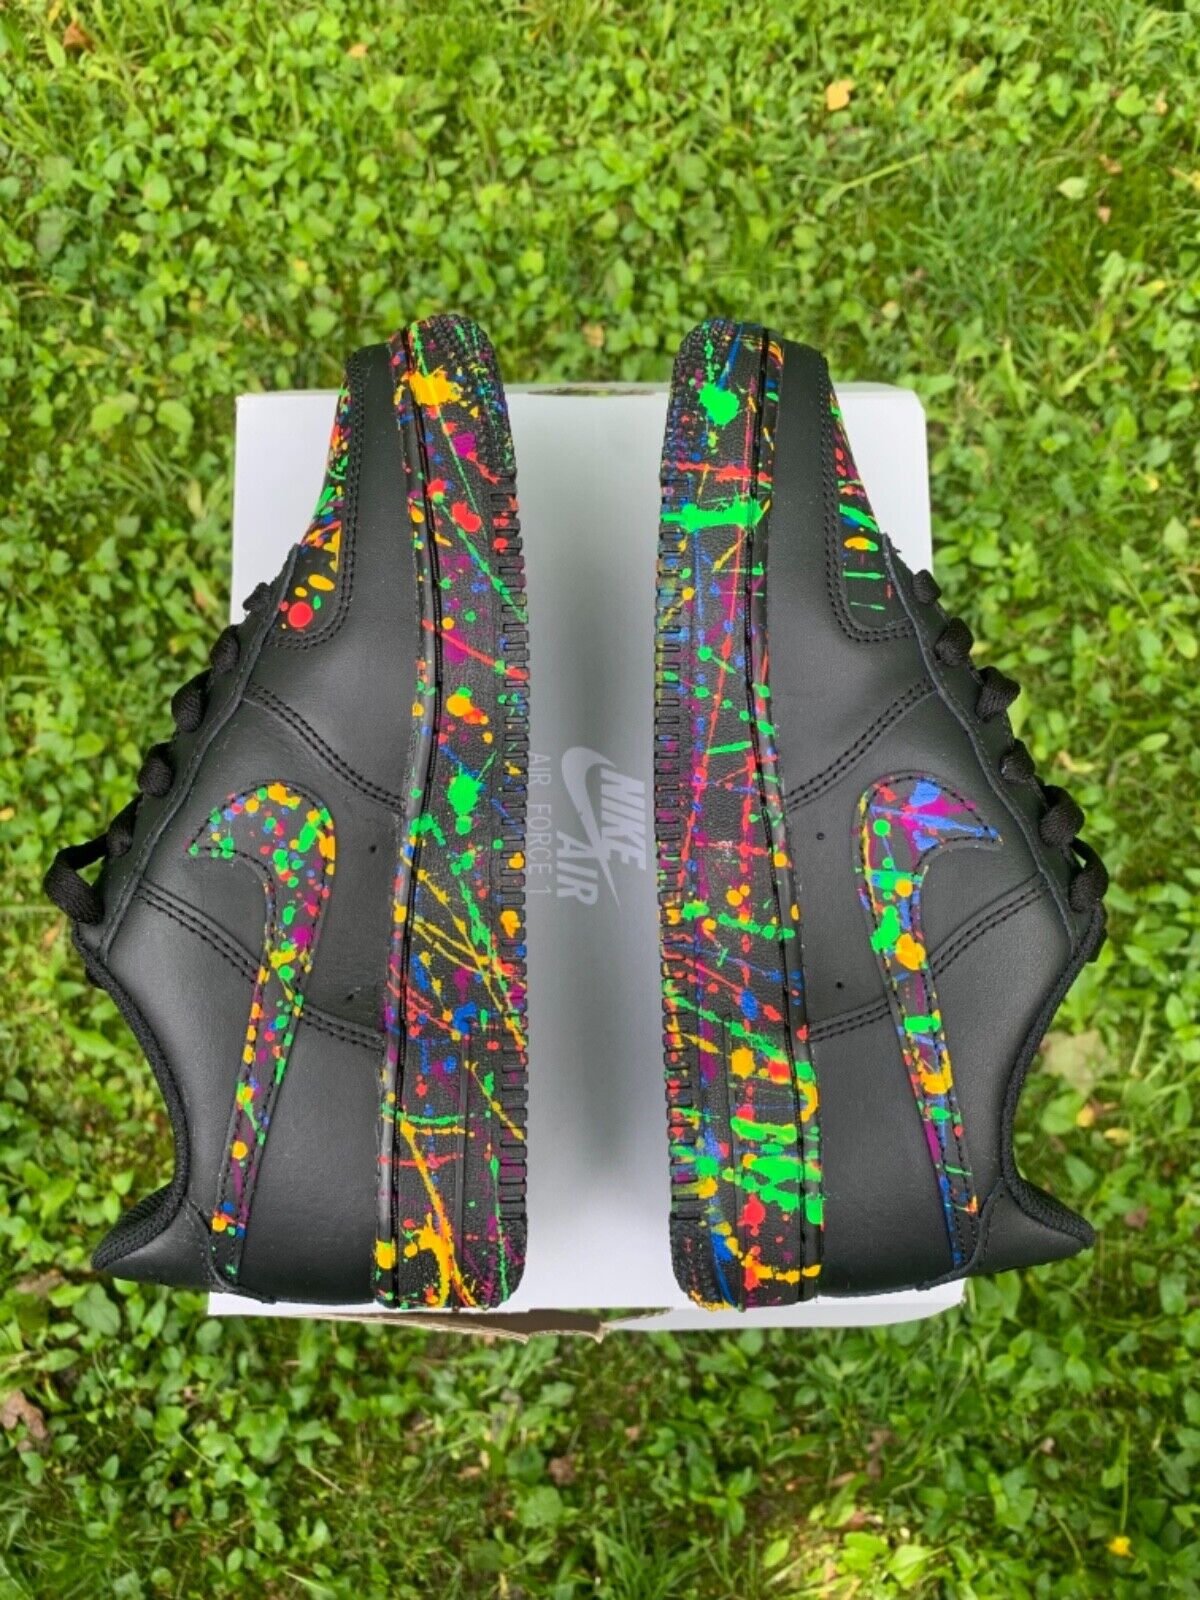 Nike Air Force 1 Custom Explosive Neon ? Splatter Graffiti Black Shoes Mens